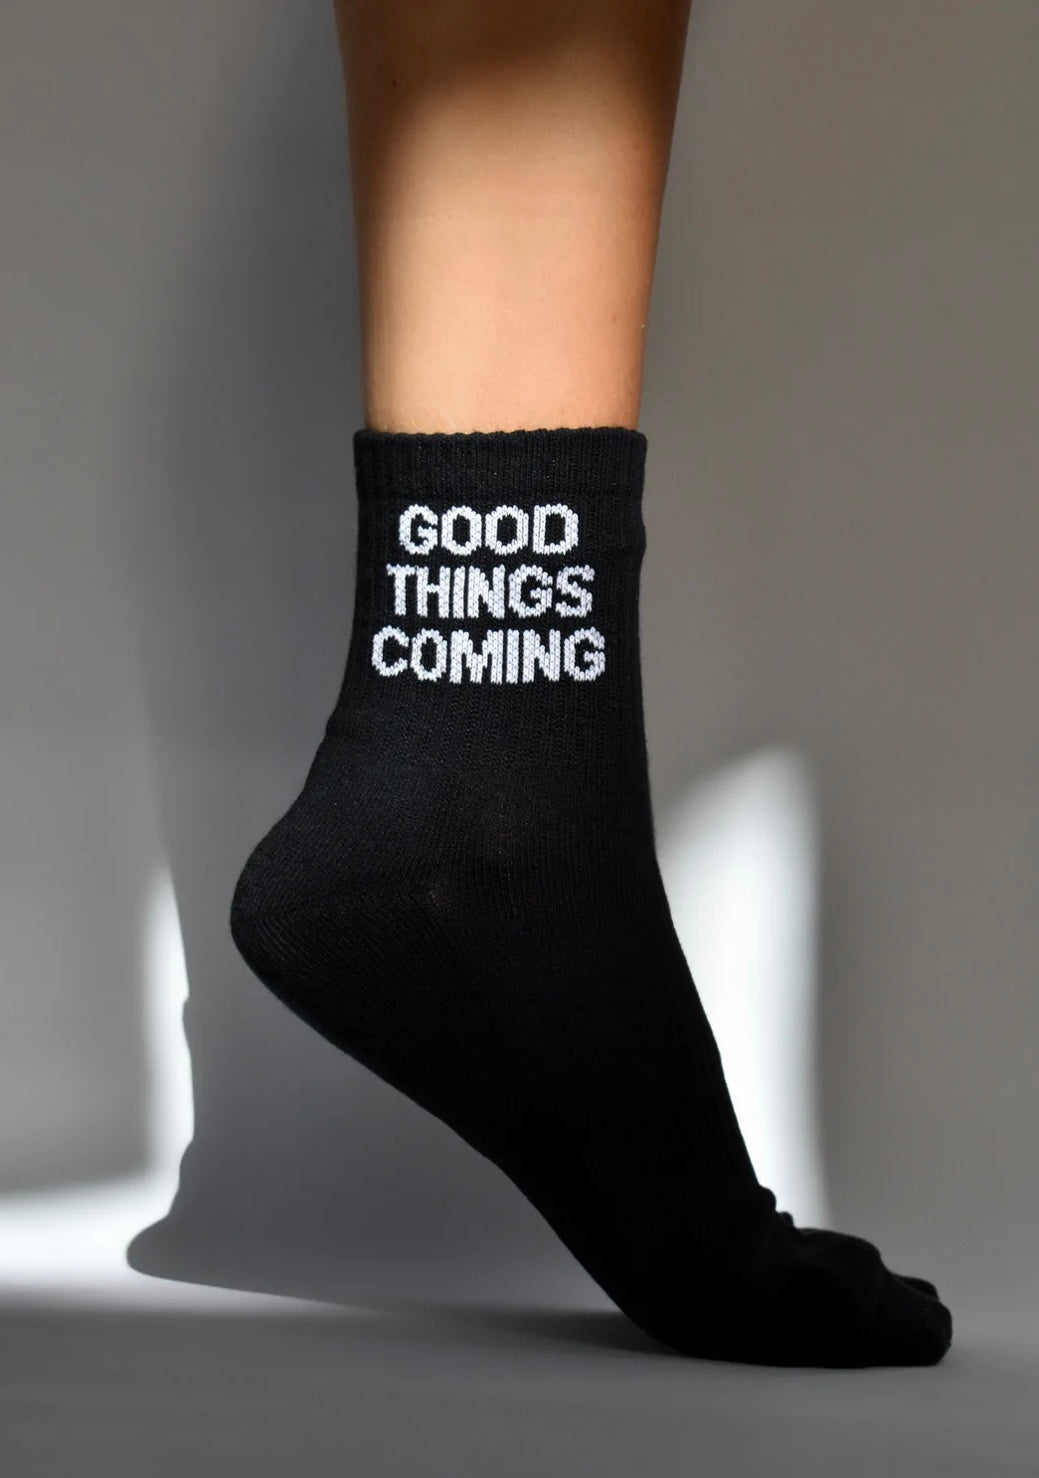 Good Things Coming Socks